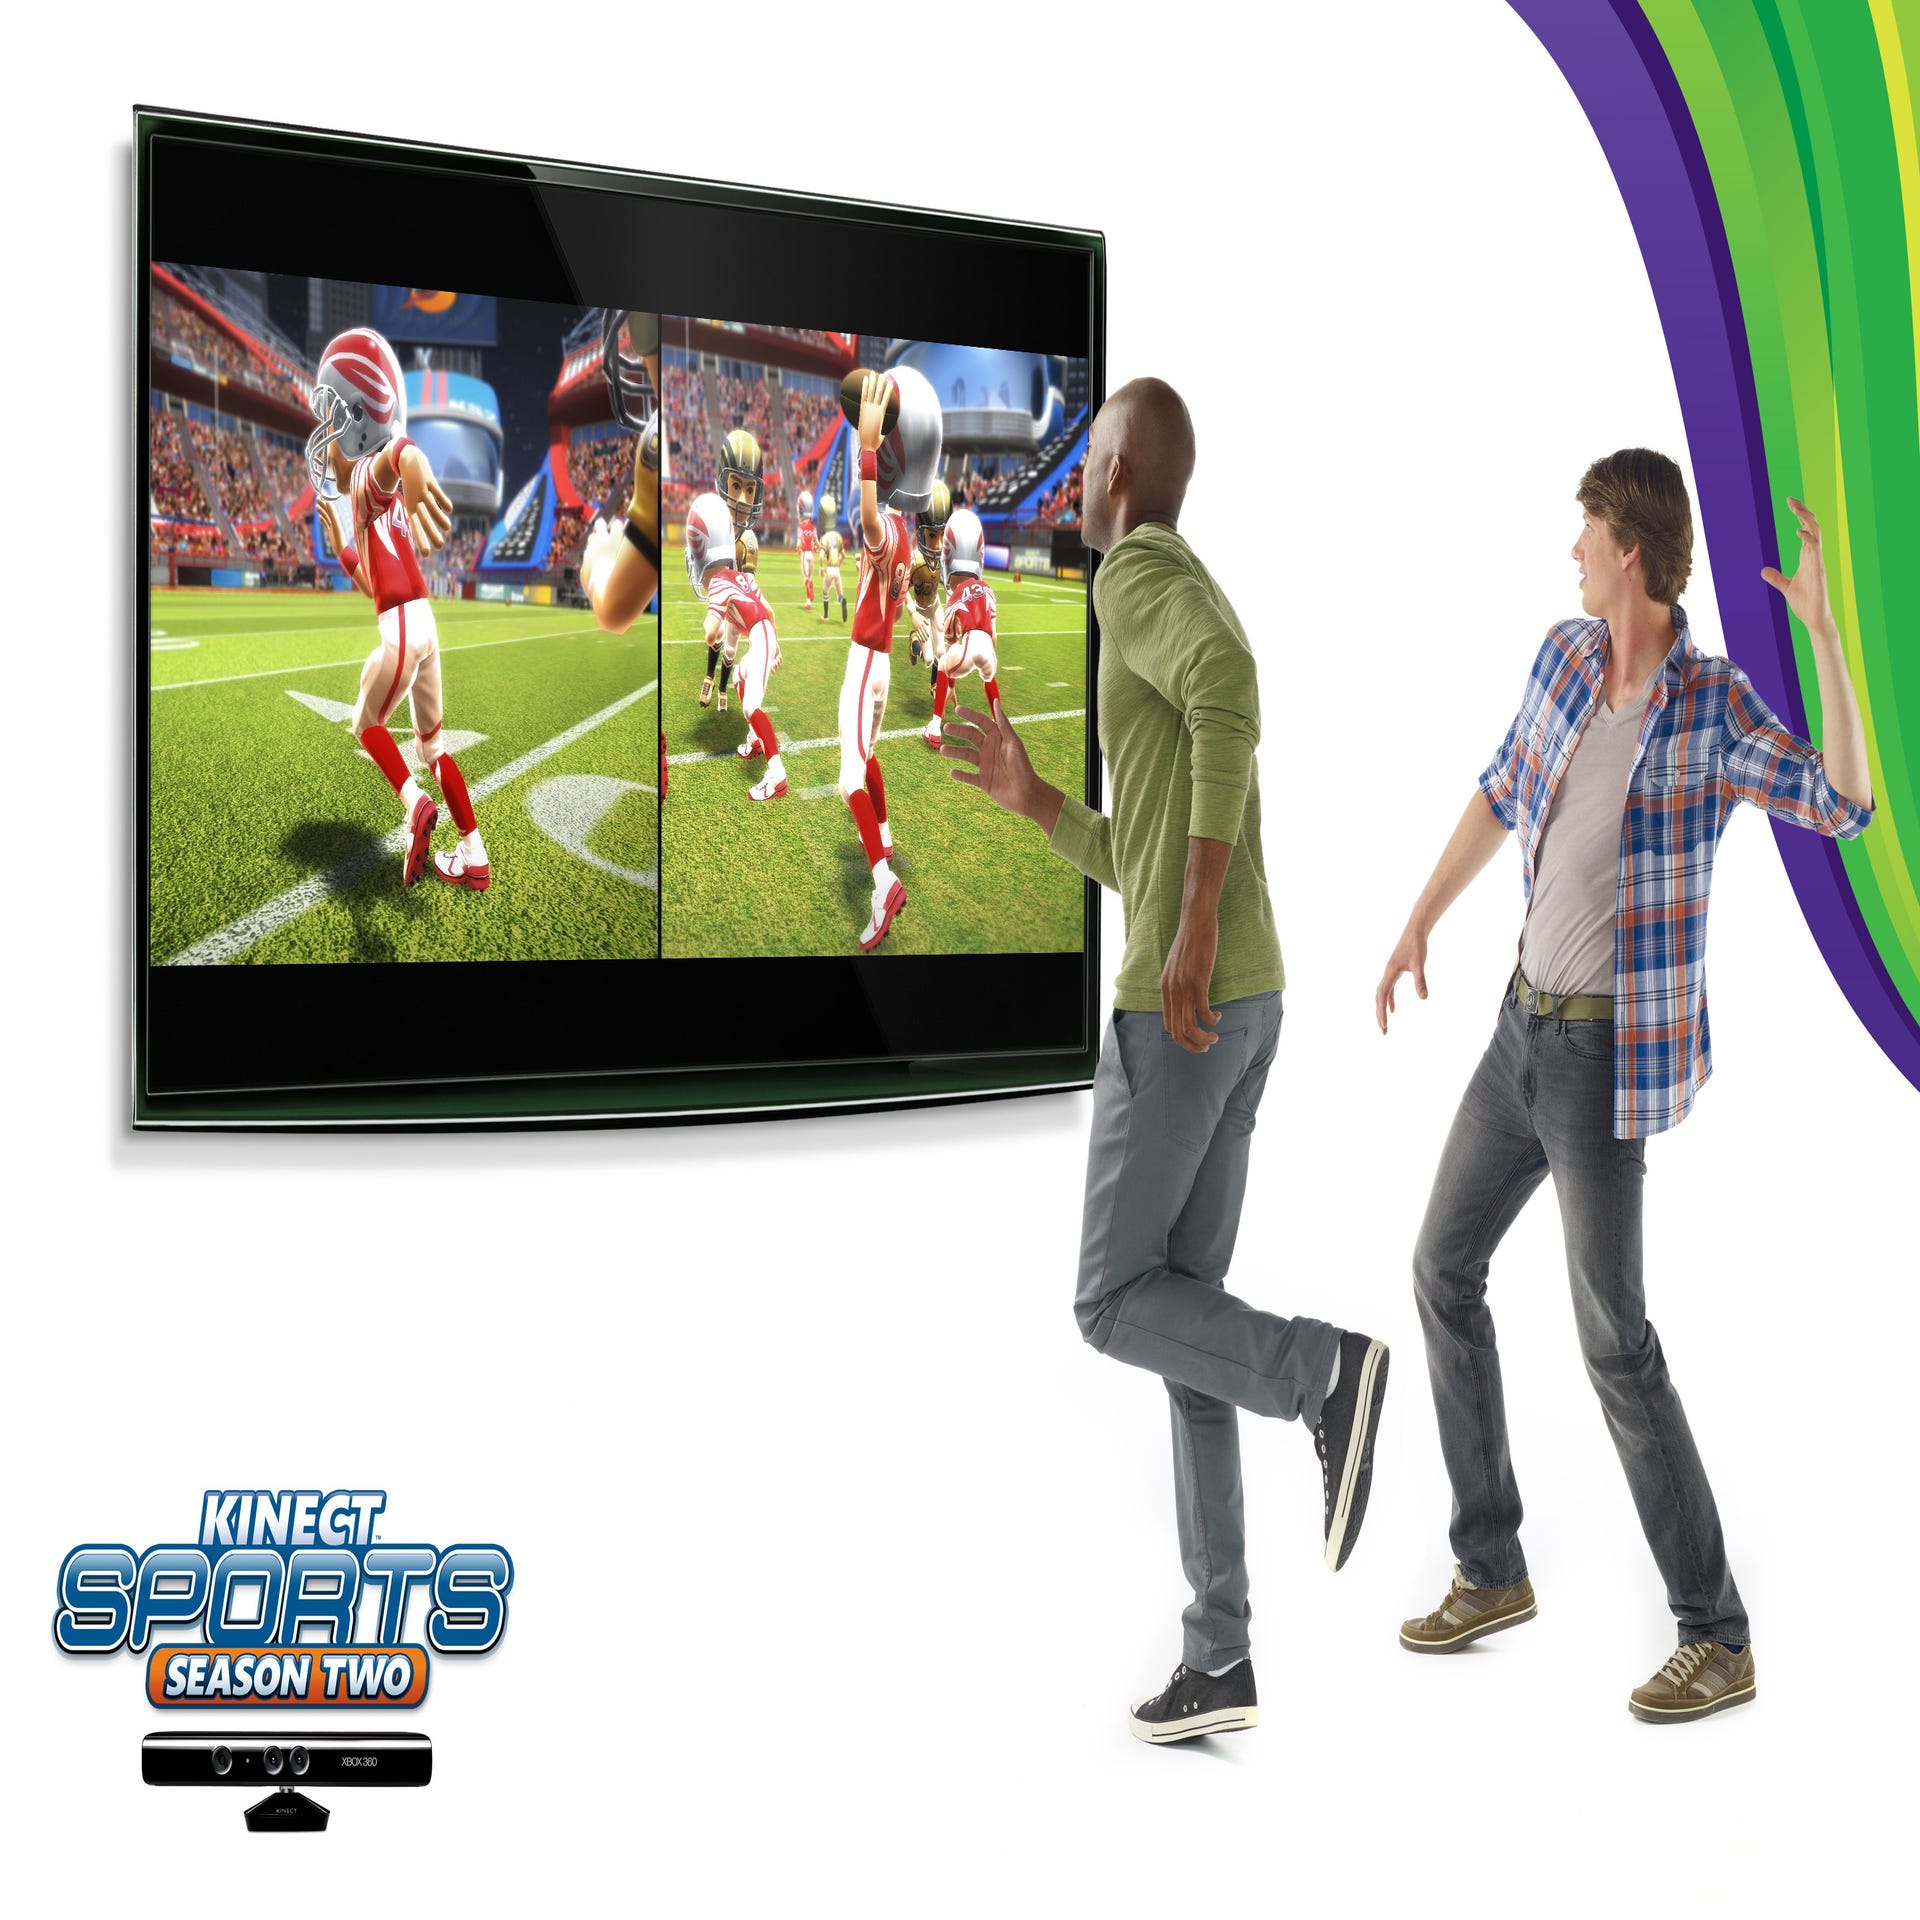  Kinect Sports Season Two : Video Games